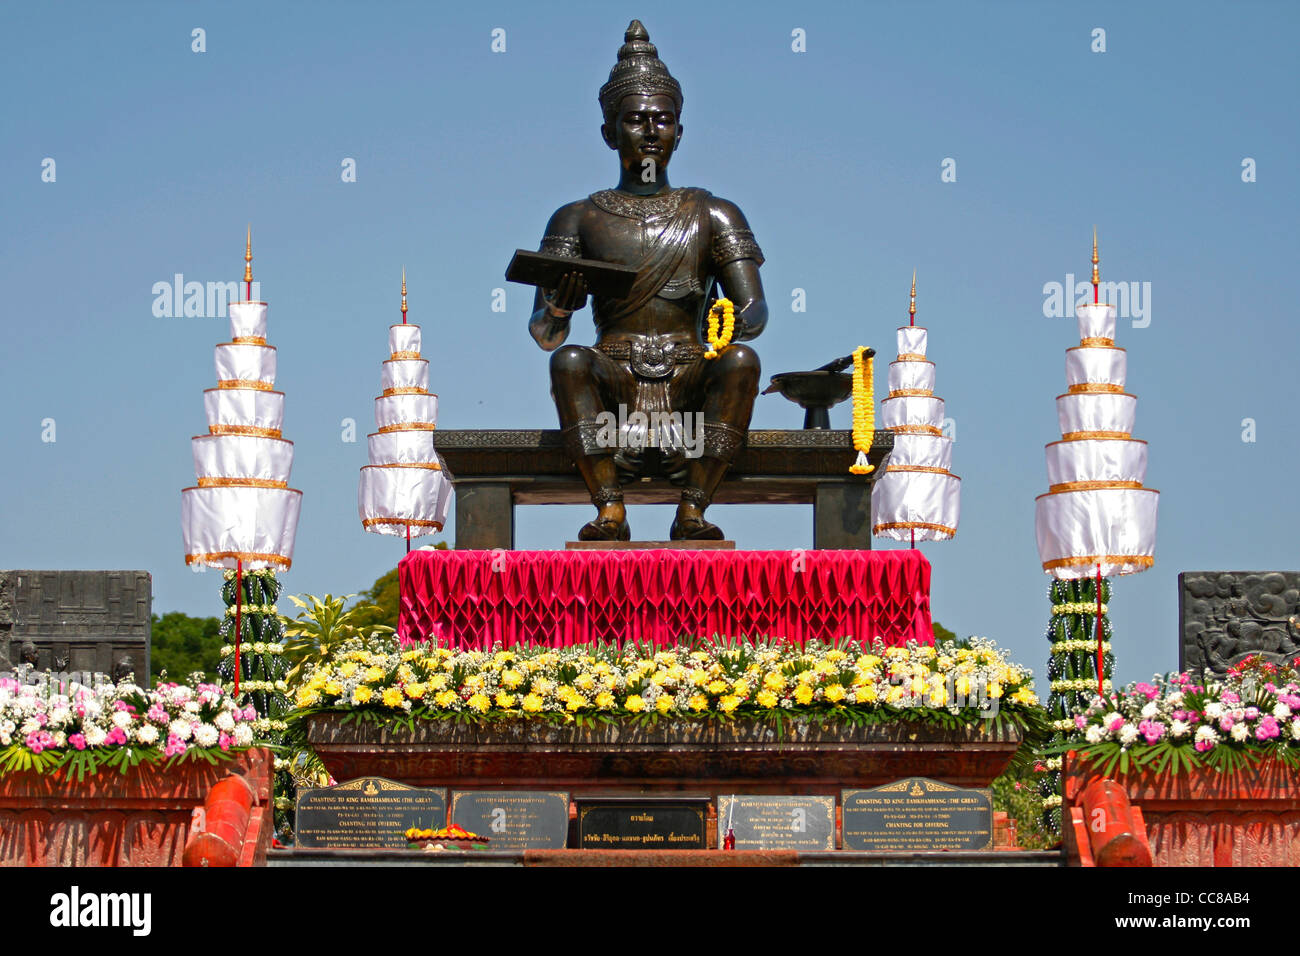 The statue of 'King Mengrai' inside the Sukothai Historical park, Thailand Stock Photo